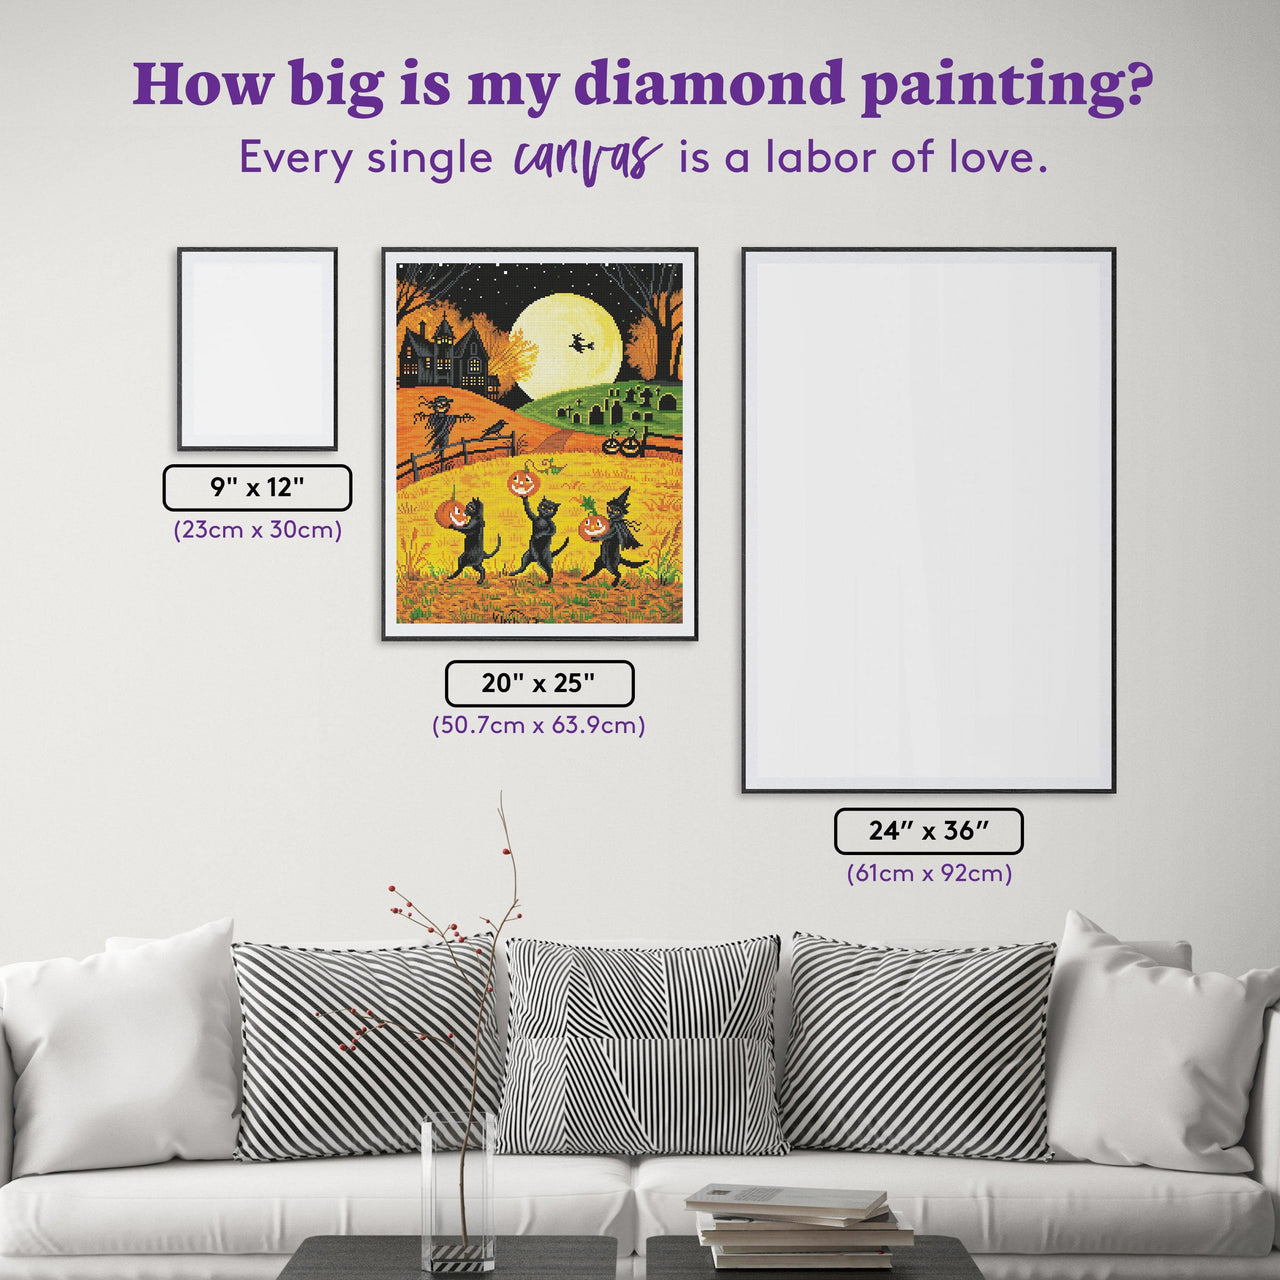 Diamond Painting Jack, Jill & JOL 20" x 25" (50.7cm x 63.9cm) / Round With 25 Colors Including 3 ABs & 1 Glow in the Dark Diamonds & 1 Fairy Dust Diamonds / 41,268